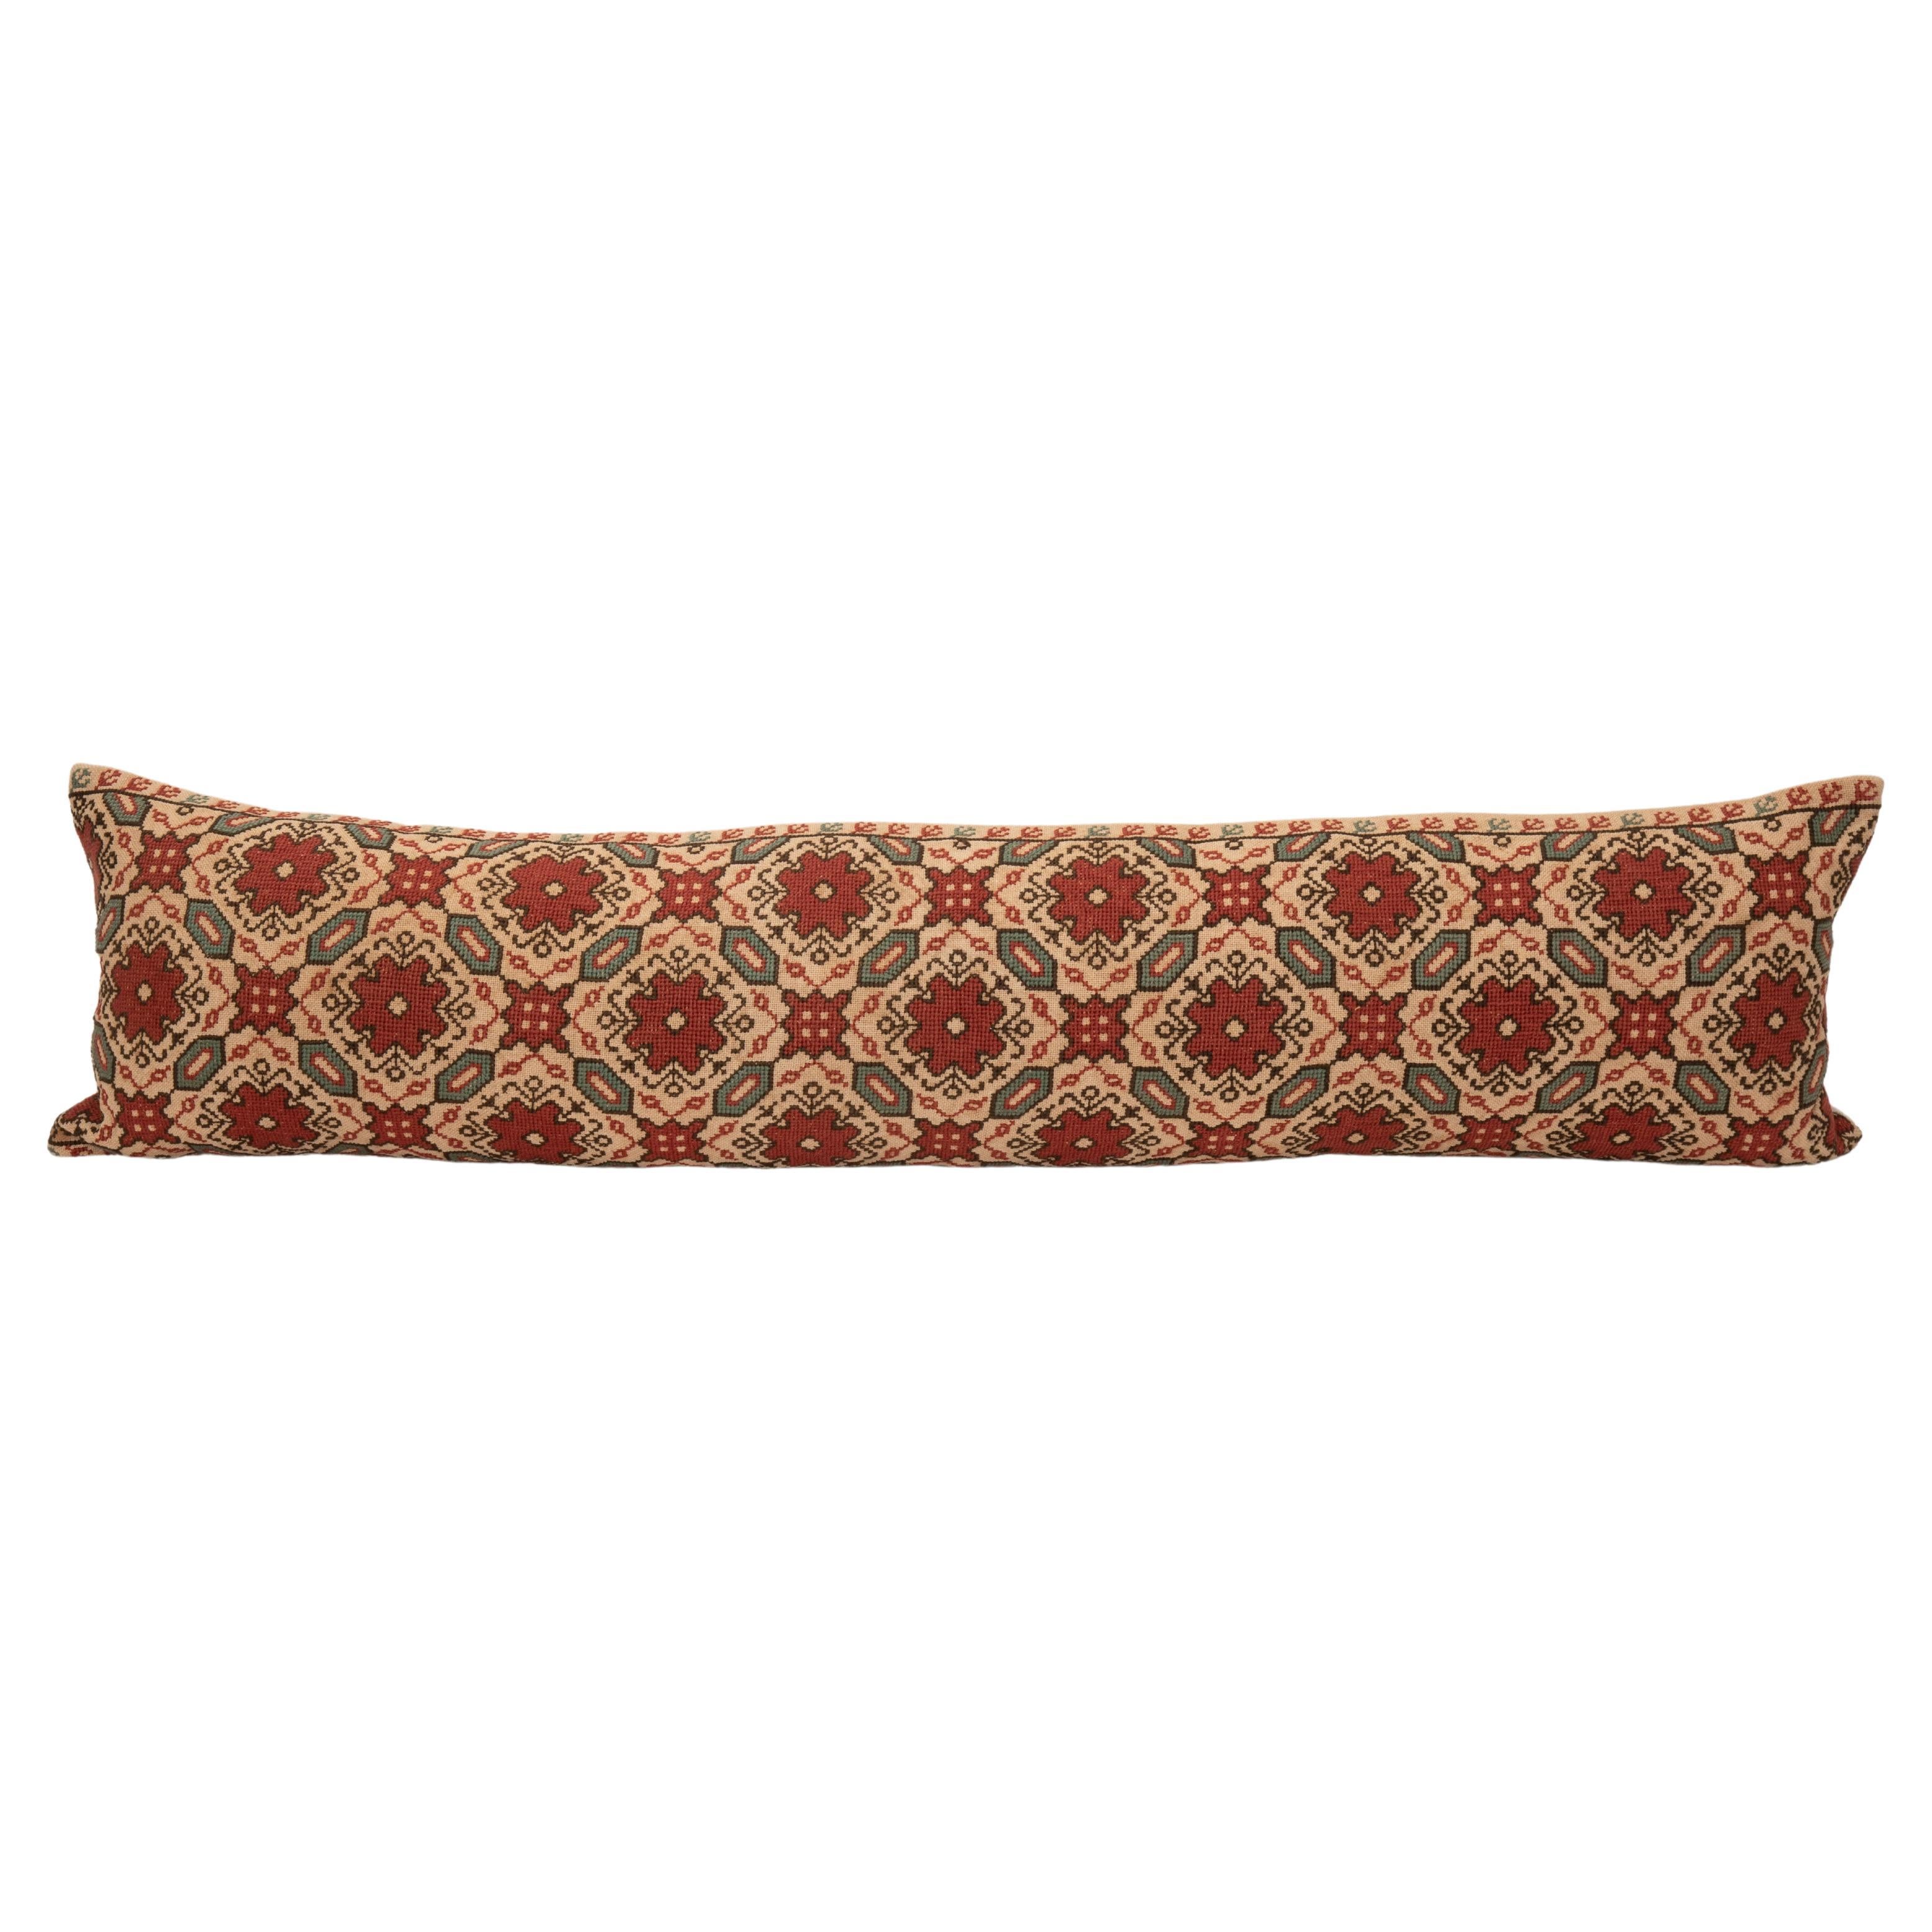 XXL Lumbar Pillow Case Made from an Eastern European Embroidery, 1900s